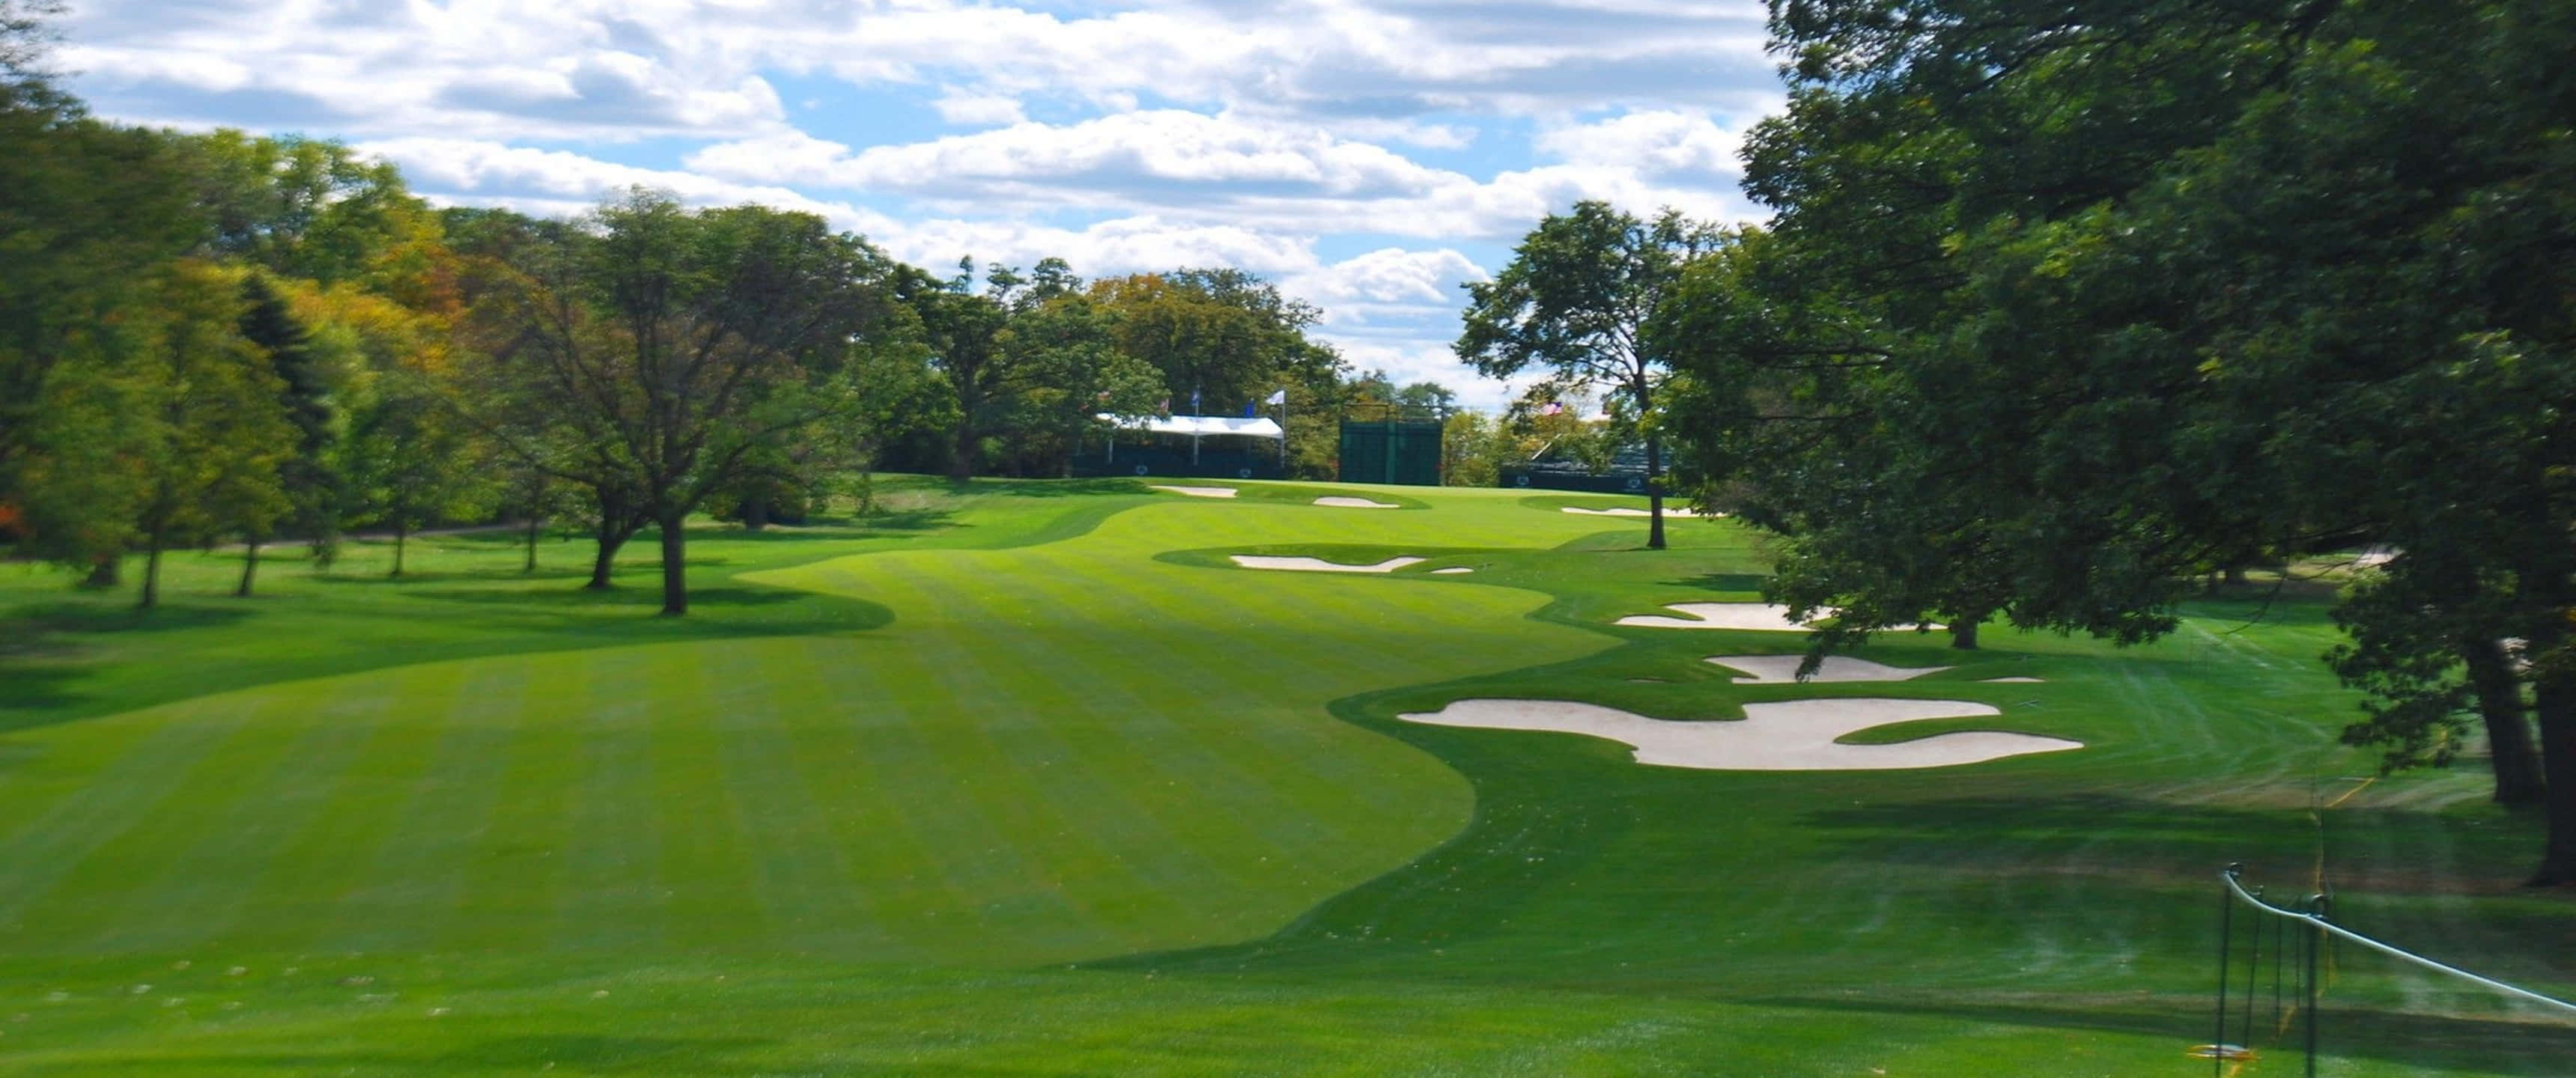 The Ridgewood 3440x1440p Golf Course Background